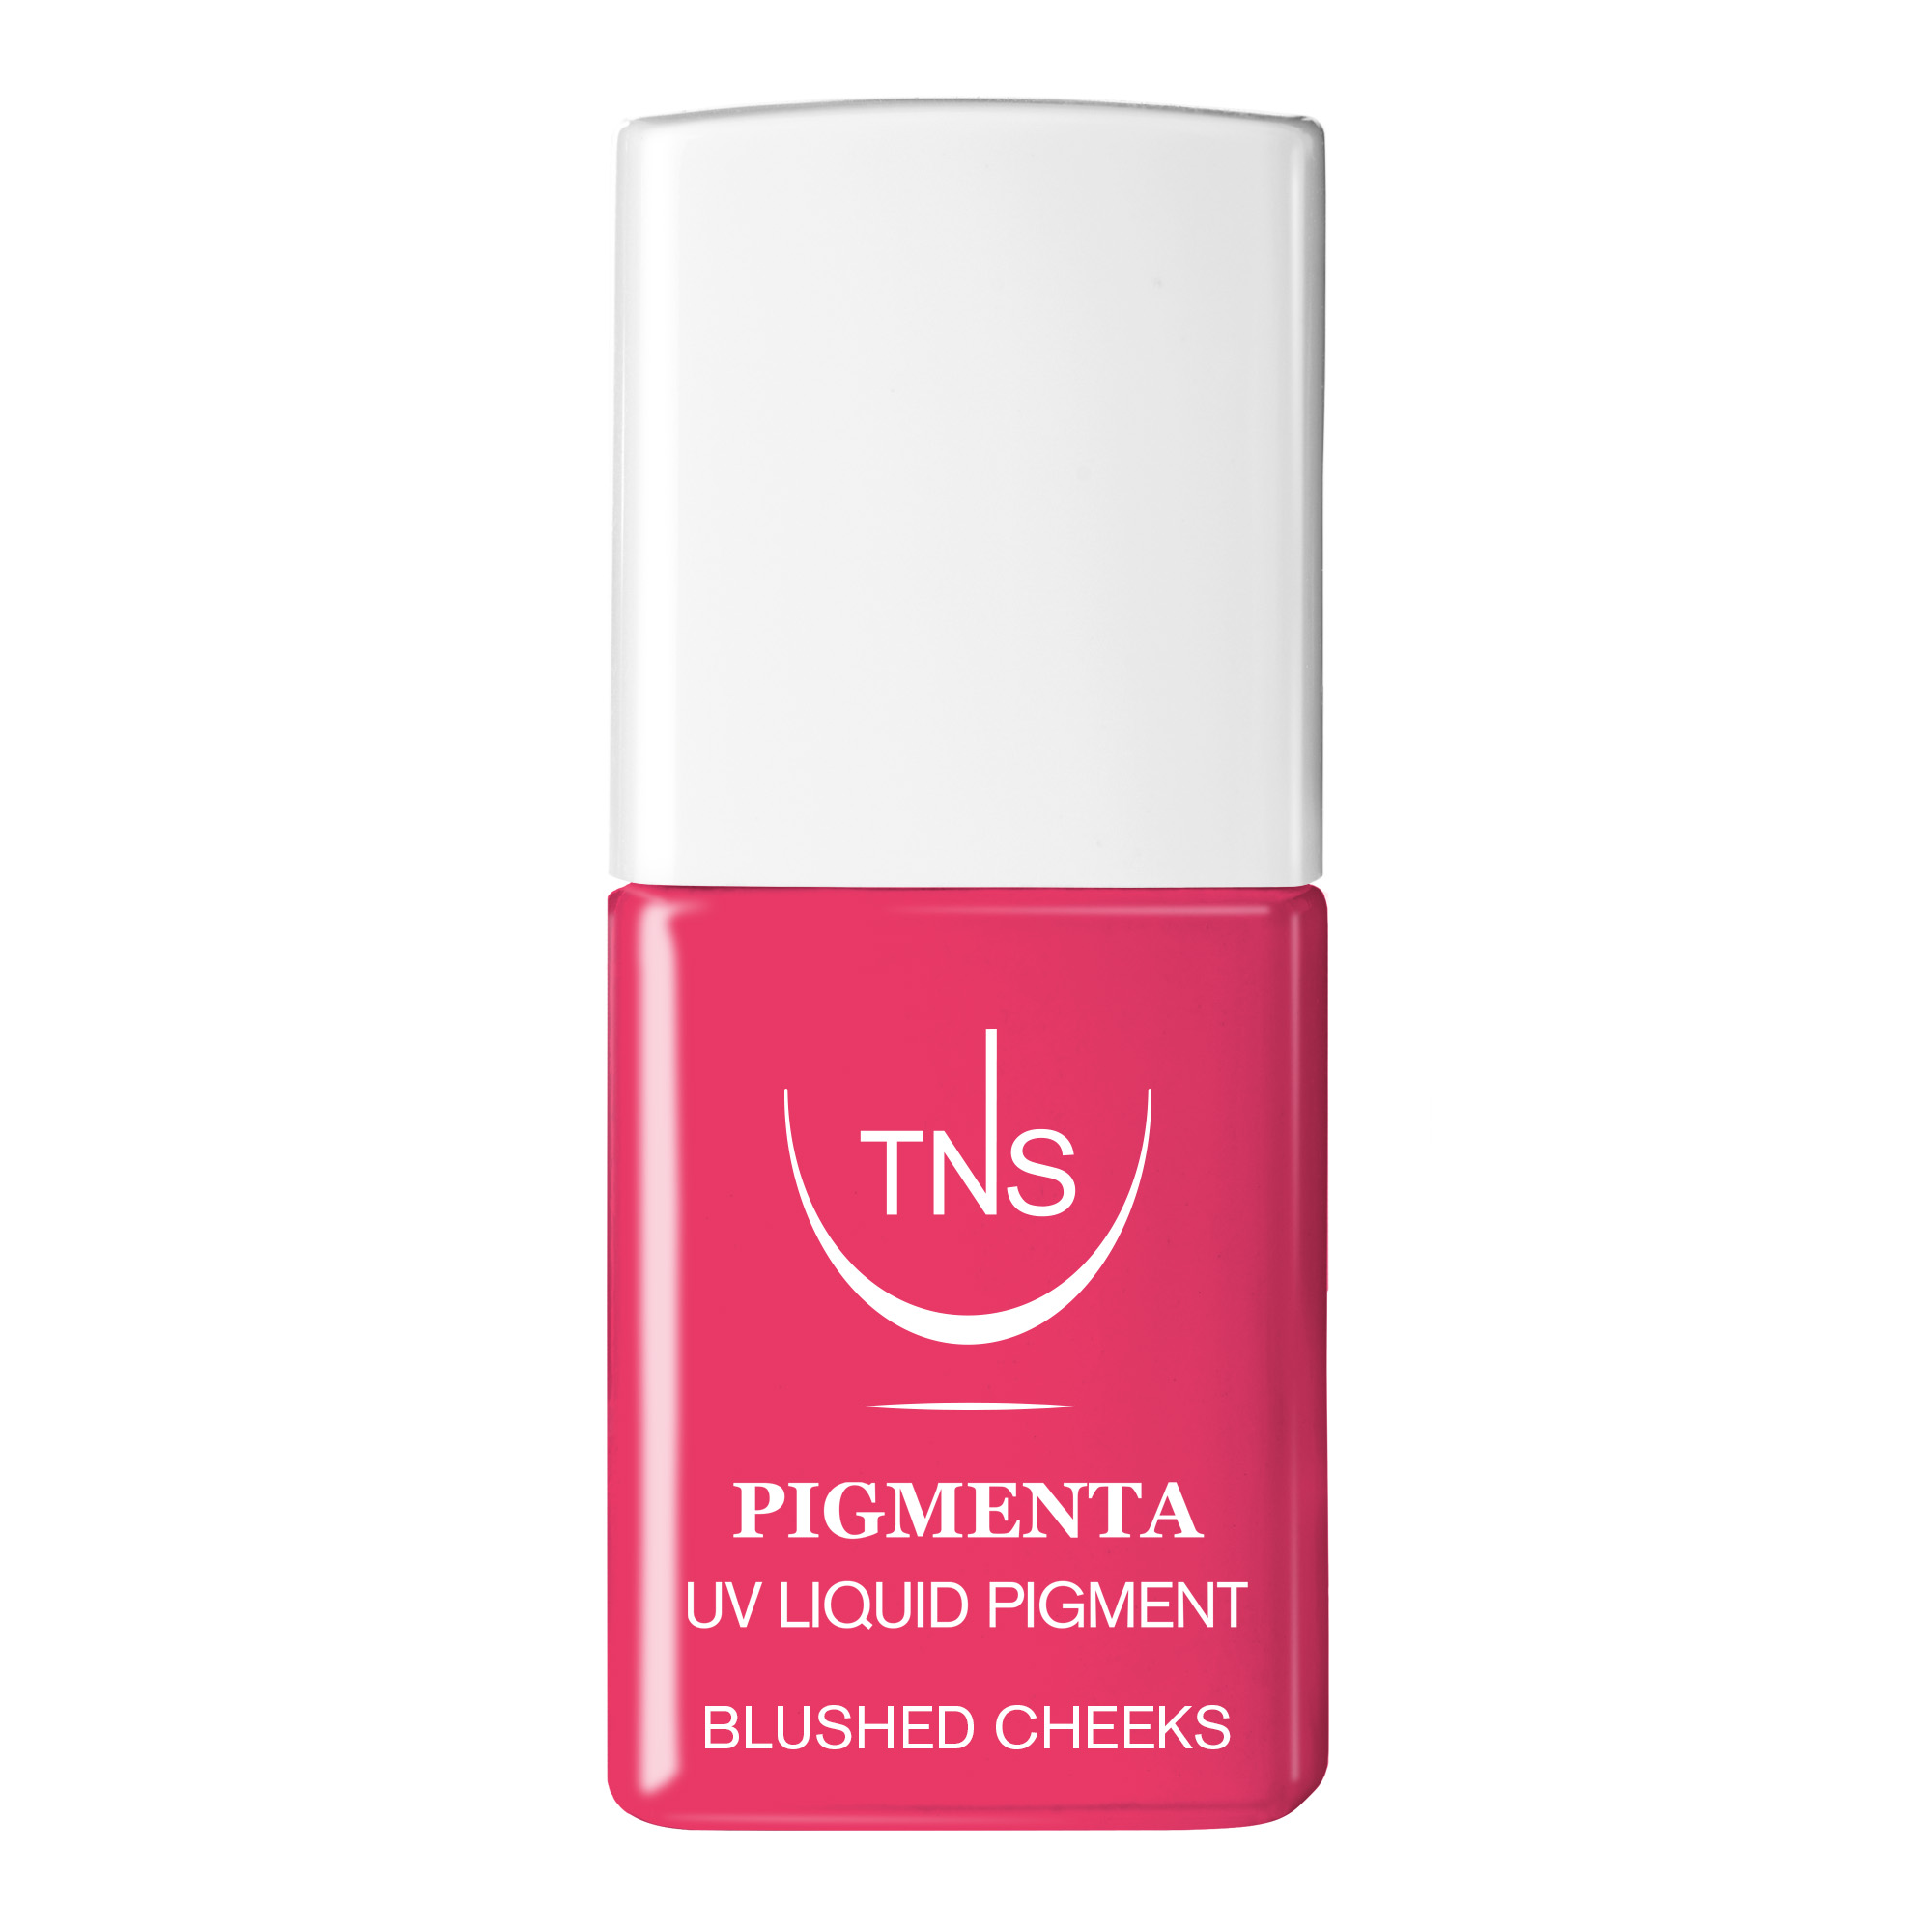 UV Flüssigpigment Blushed Cheeks rosa 10 ml Pigmenta TNS